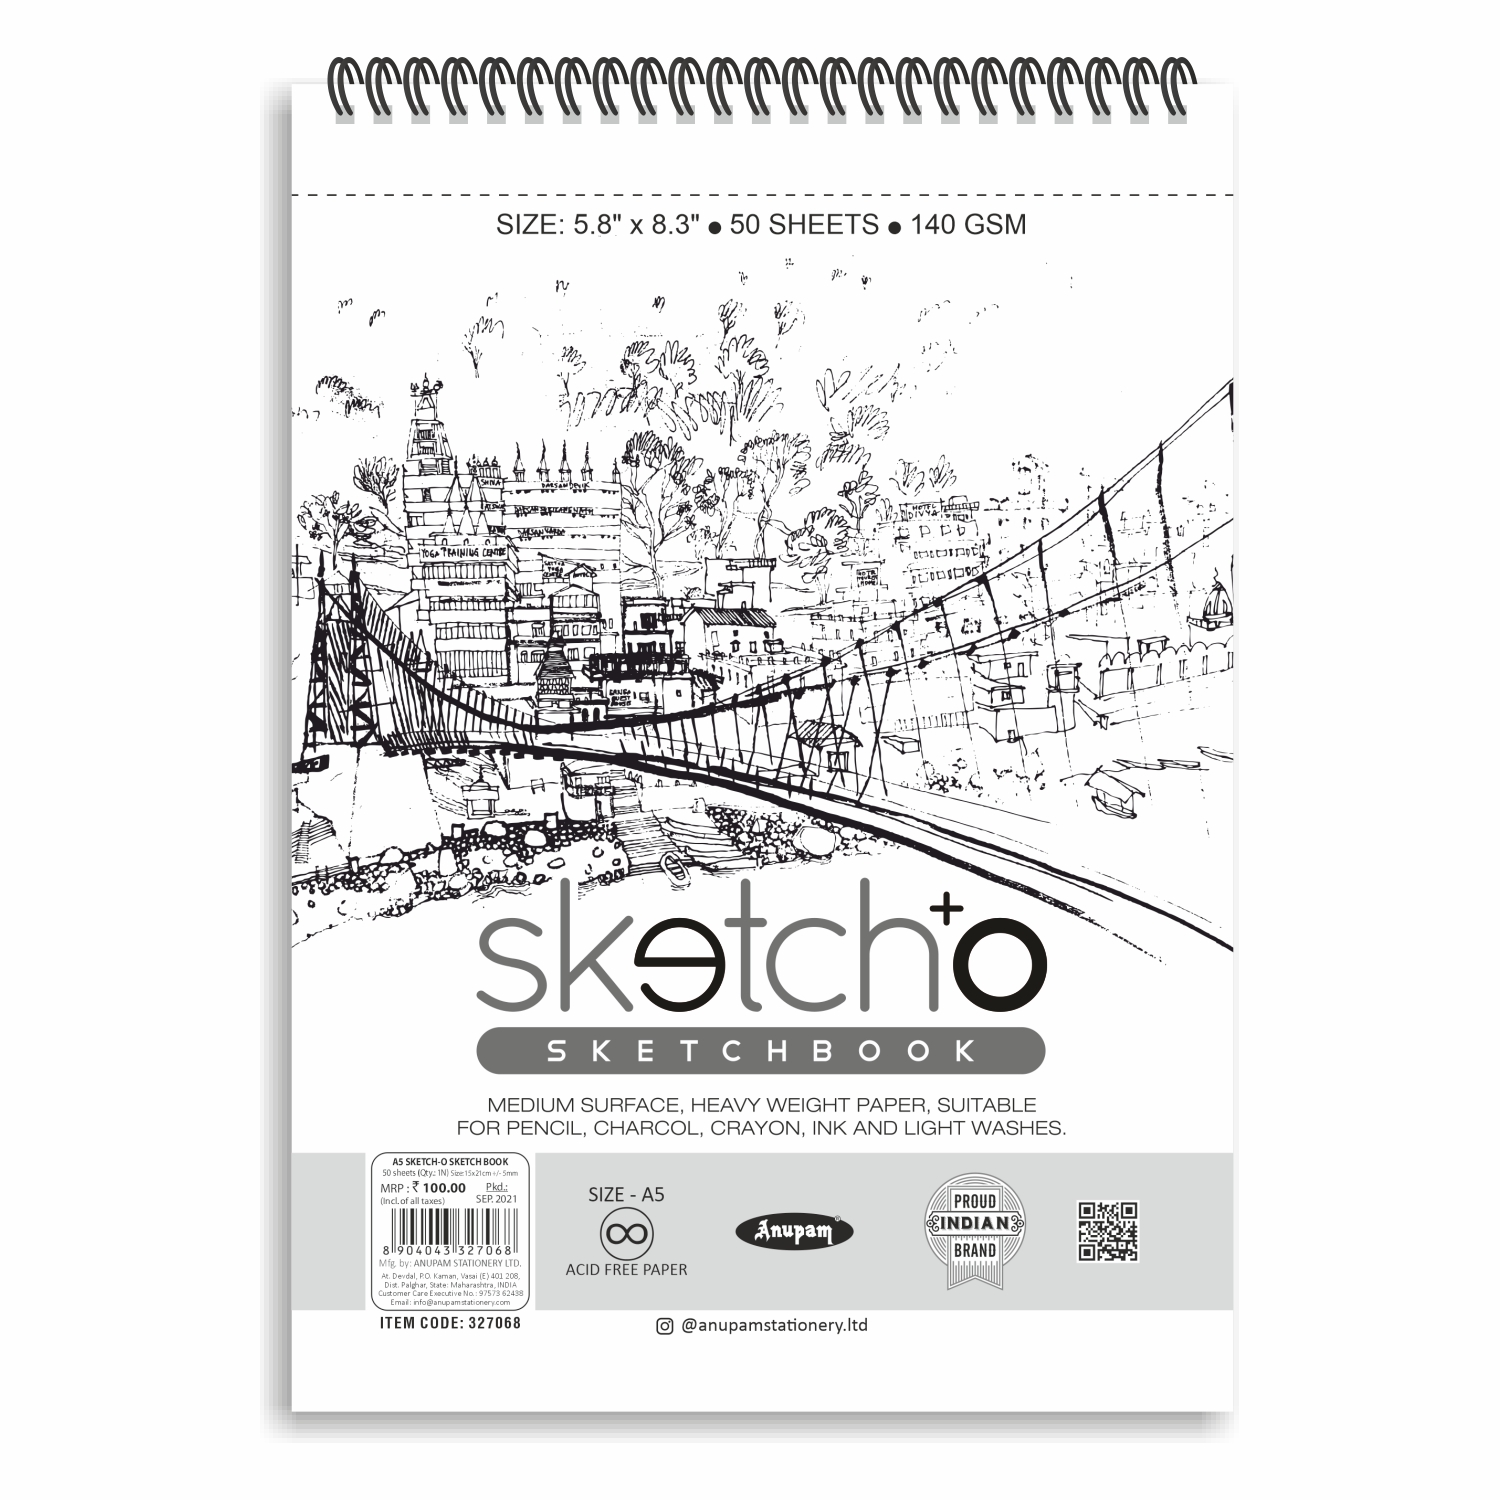 Sketch-O Sketch Drawing Book (Soft Cover) – 140GSM - Anupam Stationery